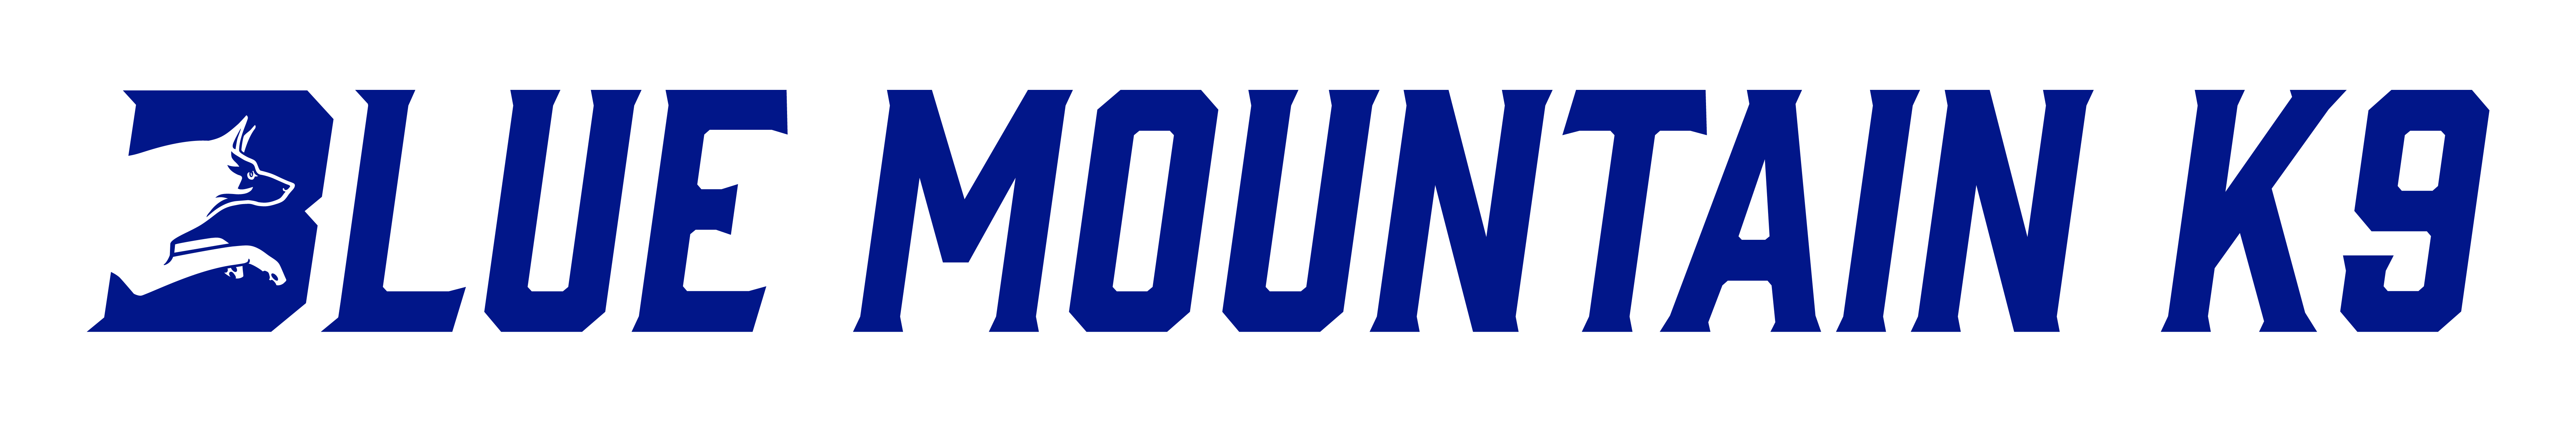 Blue Mountain K9 Logo